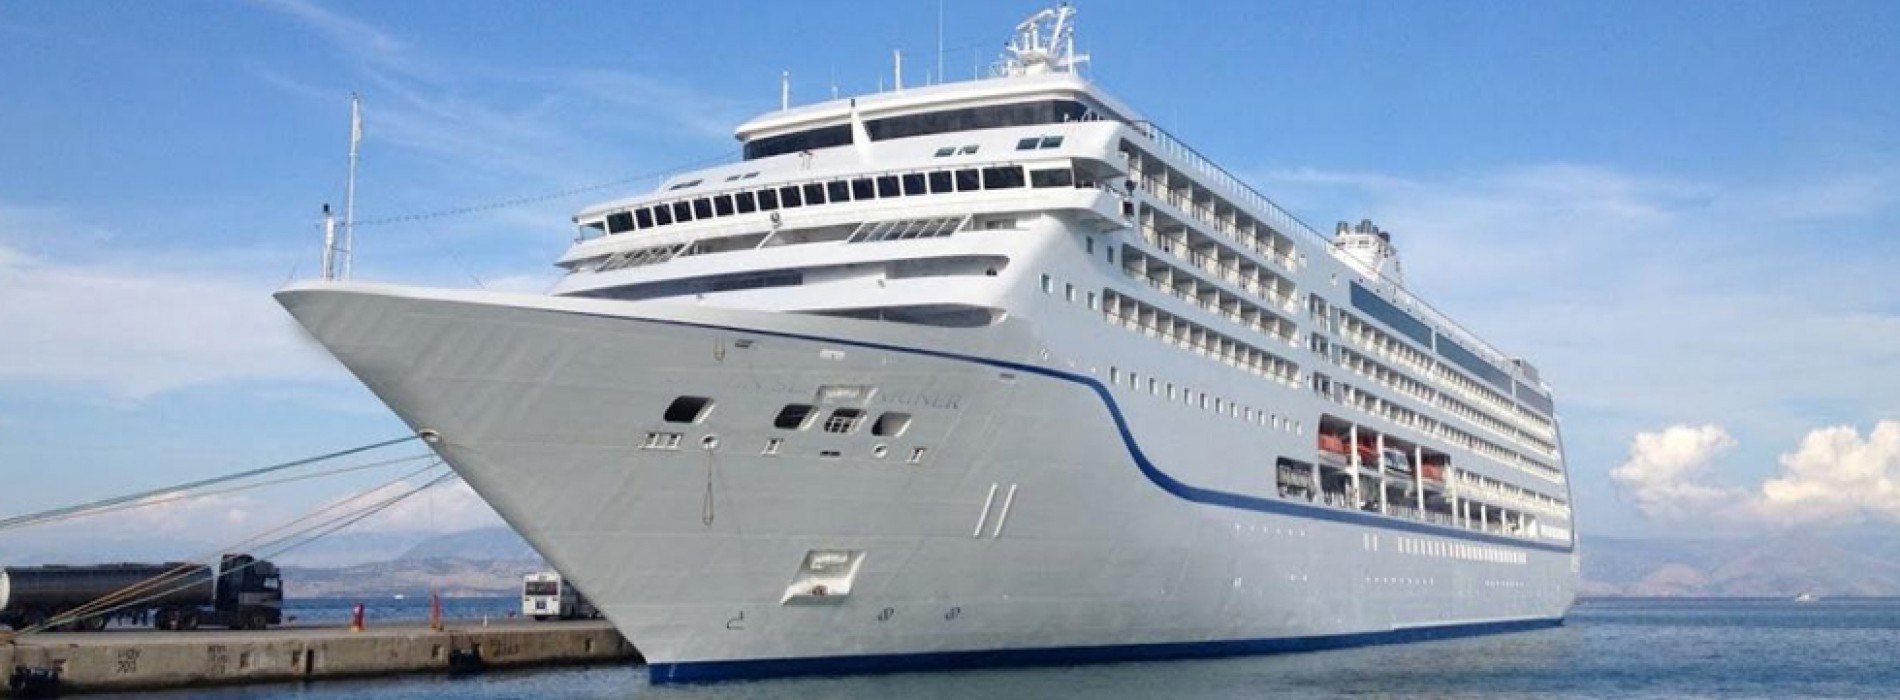 Mumbai-Goa cruise to cost Rs. 5,000 a night